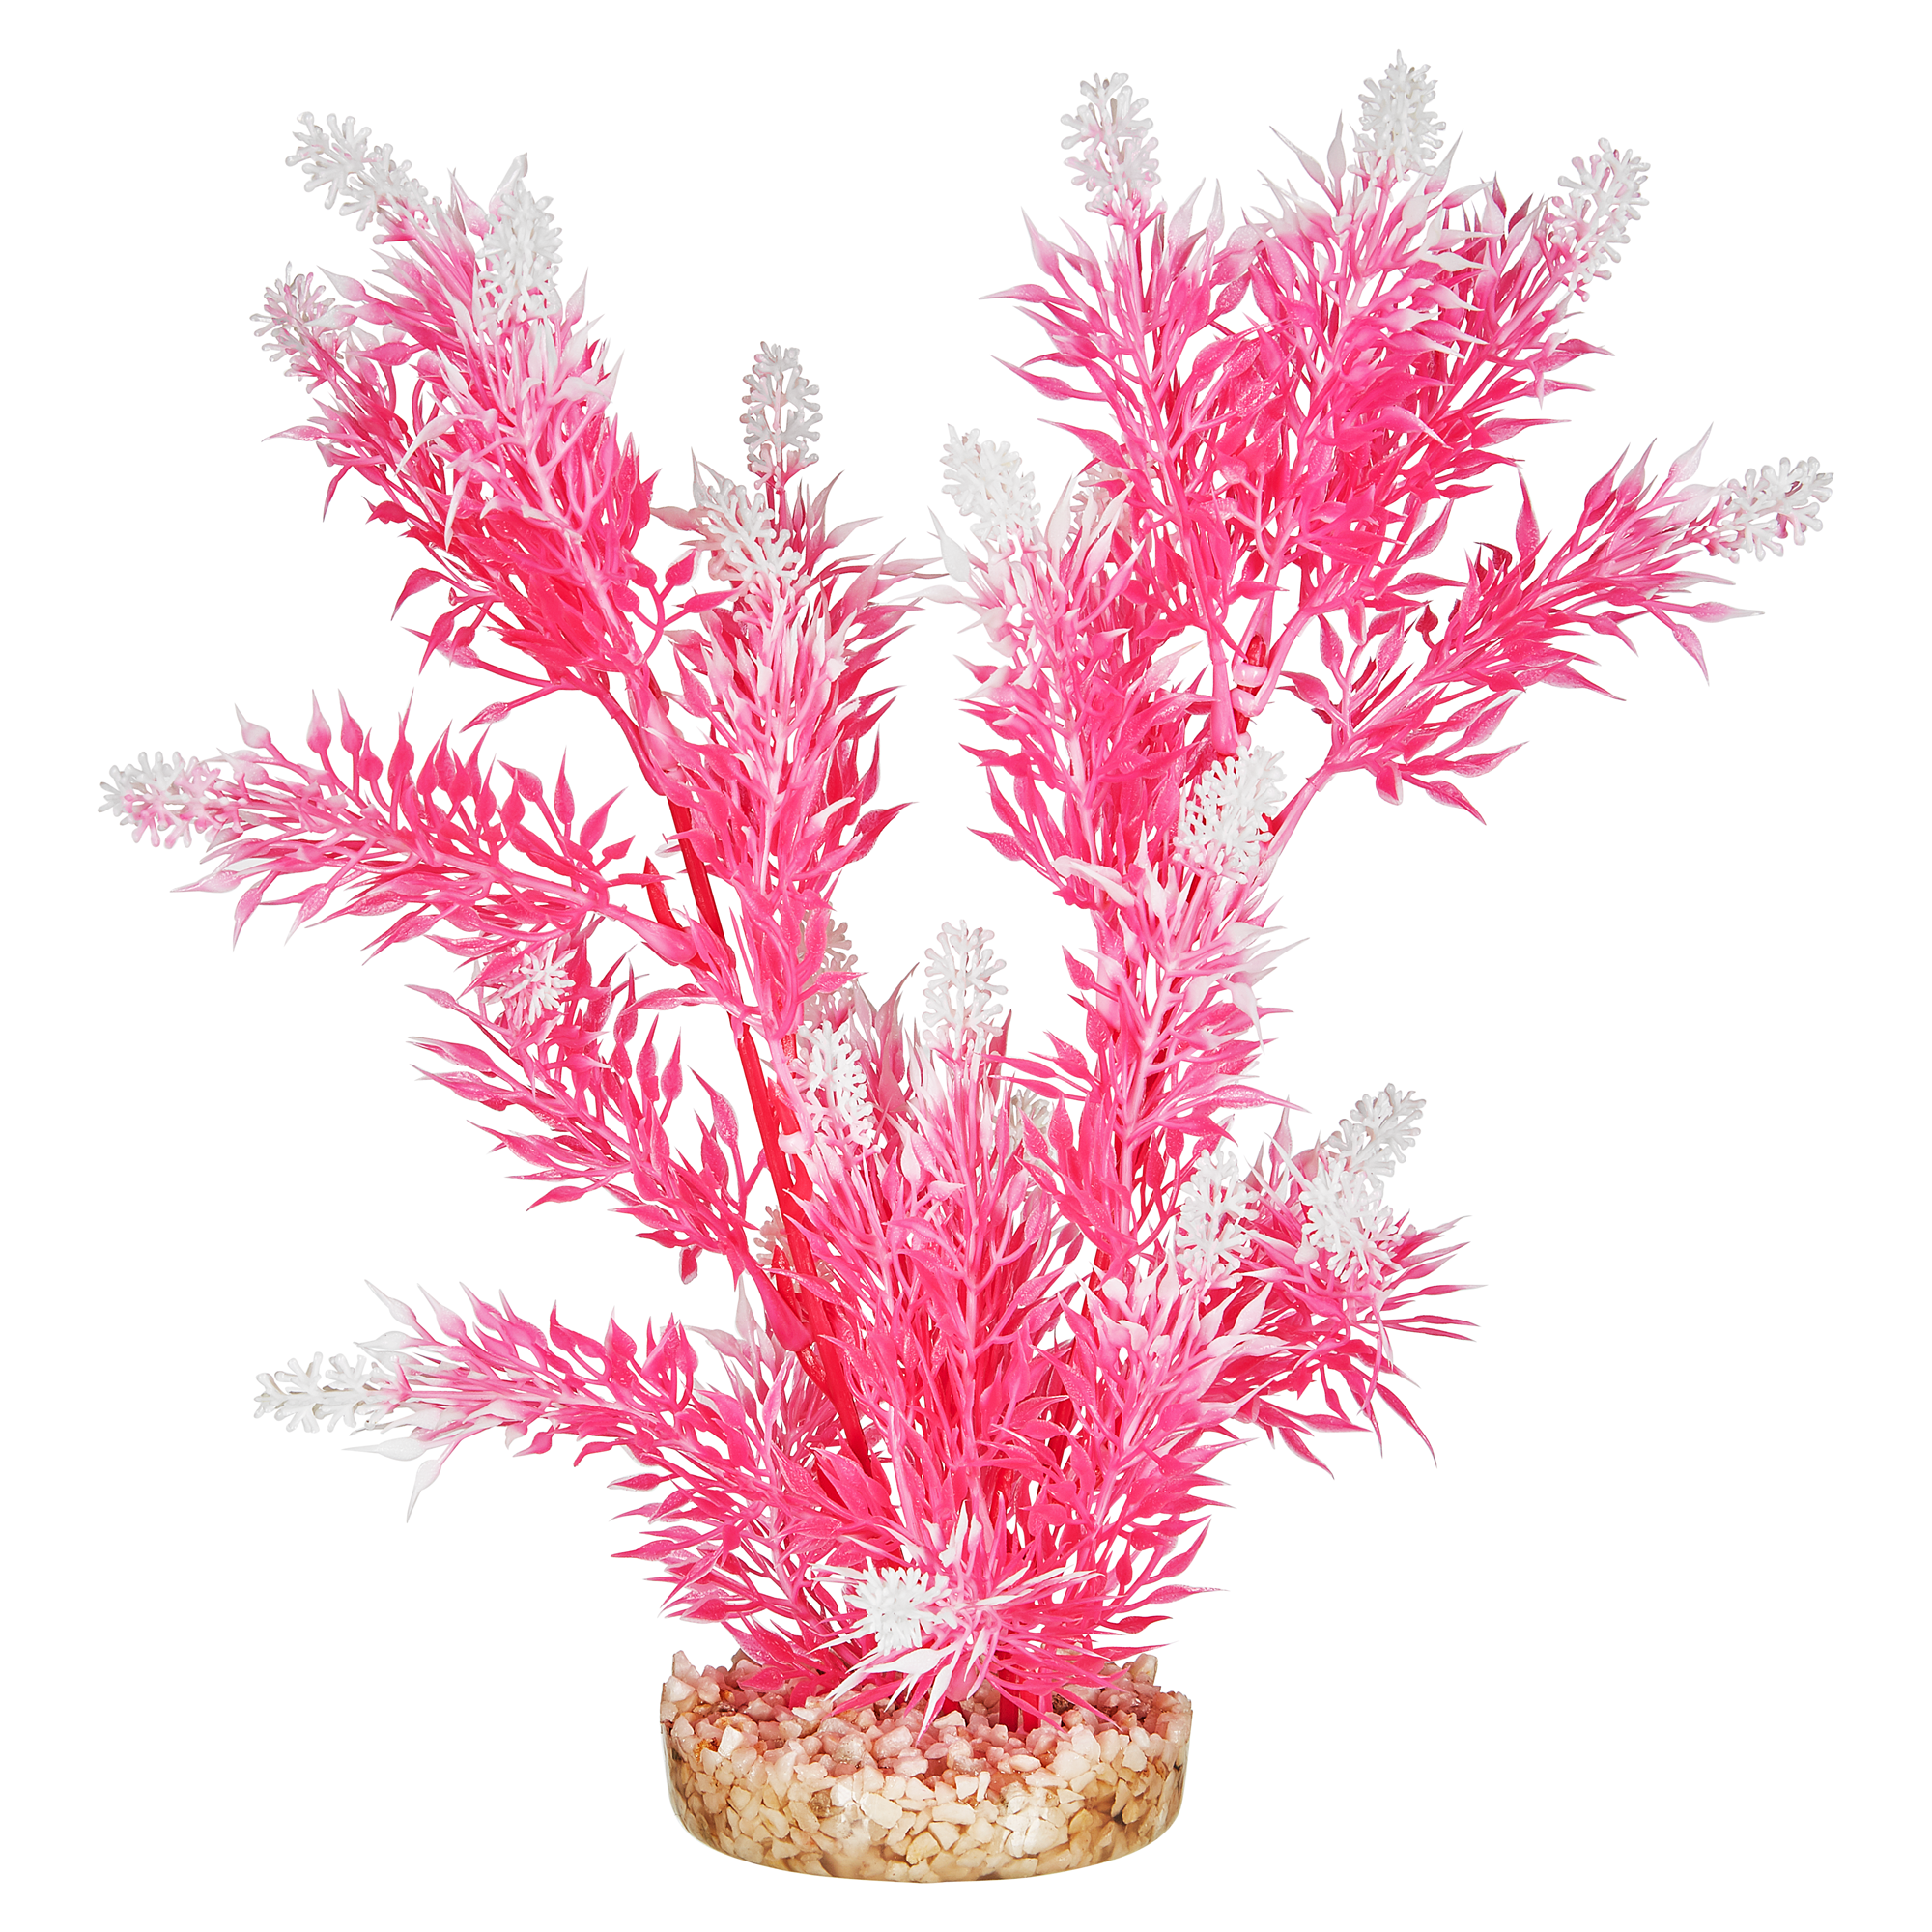 Aquarienpflanze "Fiesta Bush" Kunststoff 22 cm 2 Stück + product picture